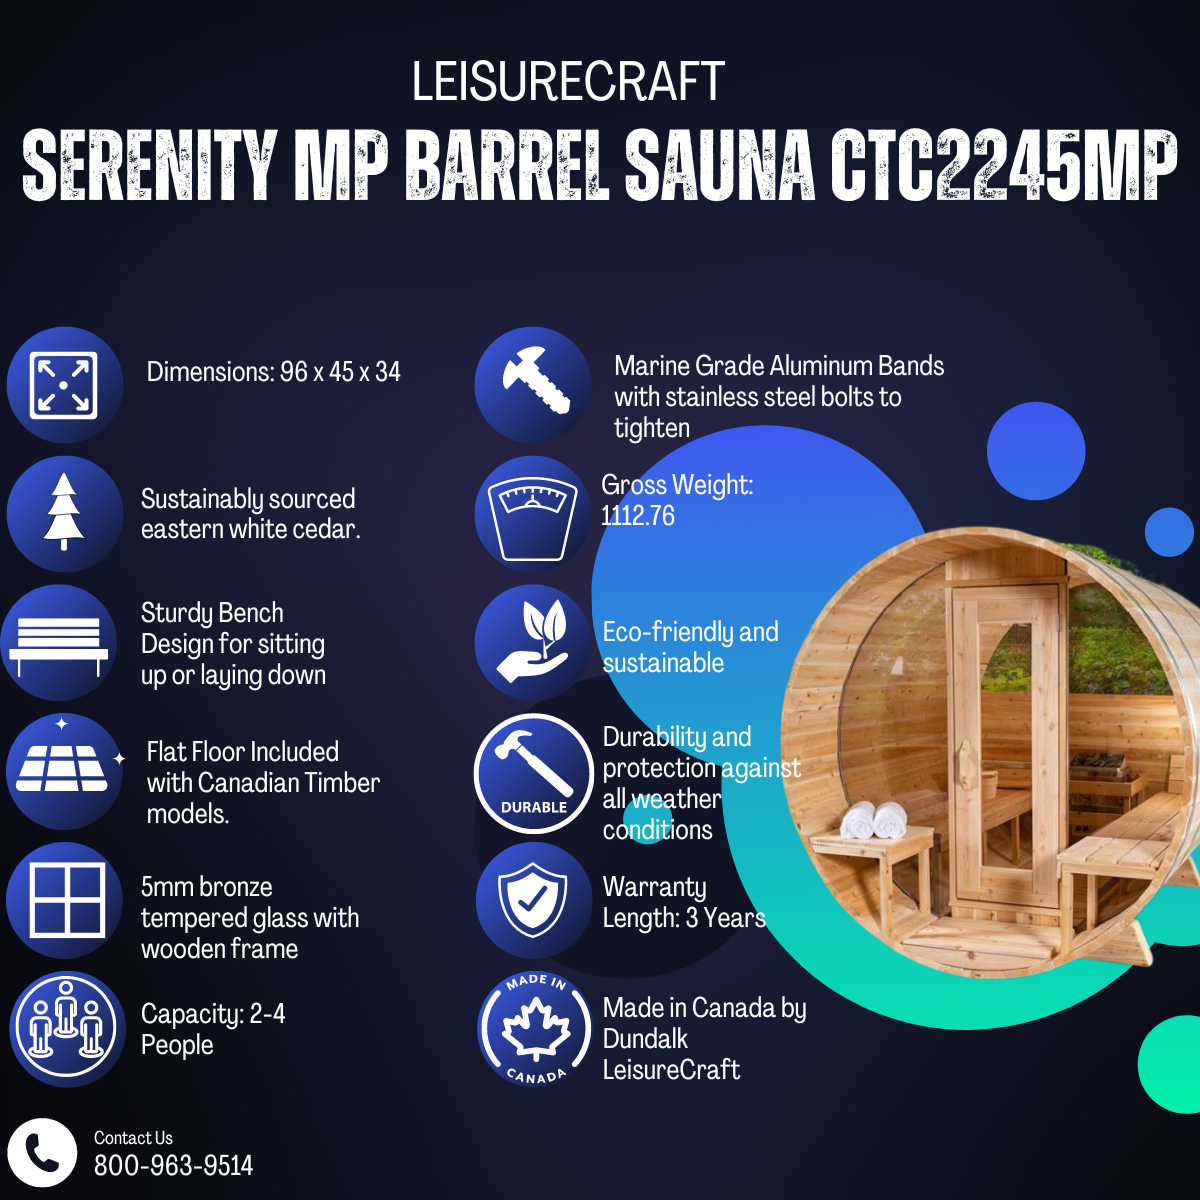 Dundalk Leisurecraft Serenity MP Barrel Sauna CTC2245MP